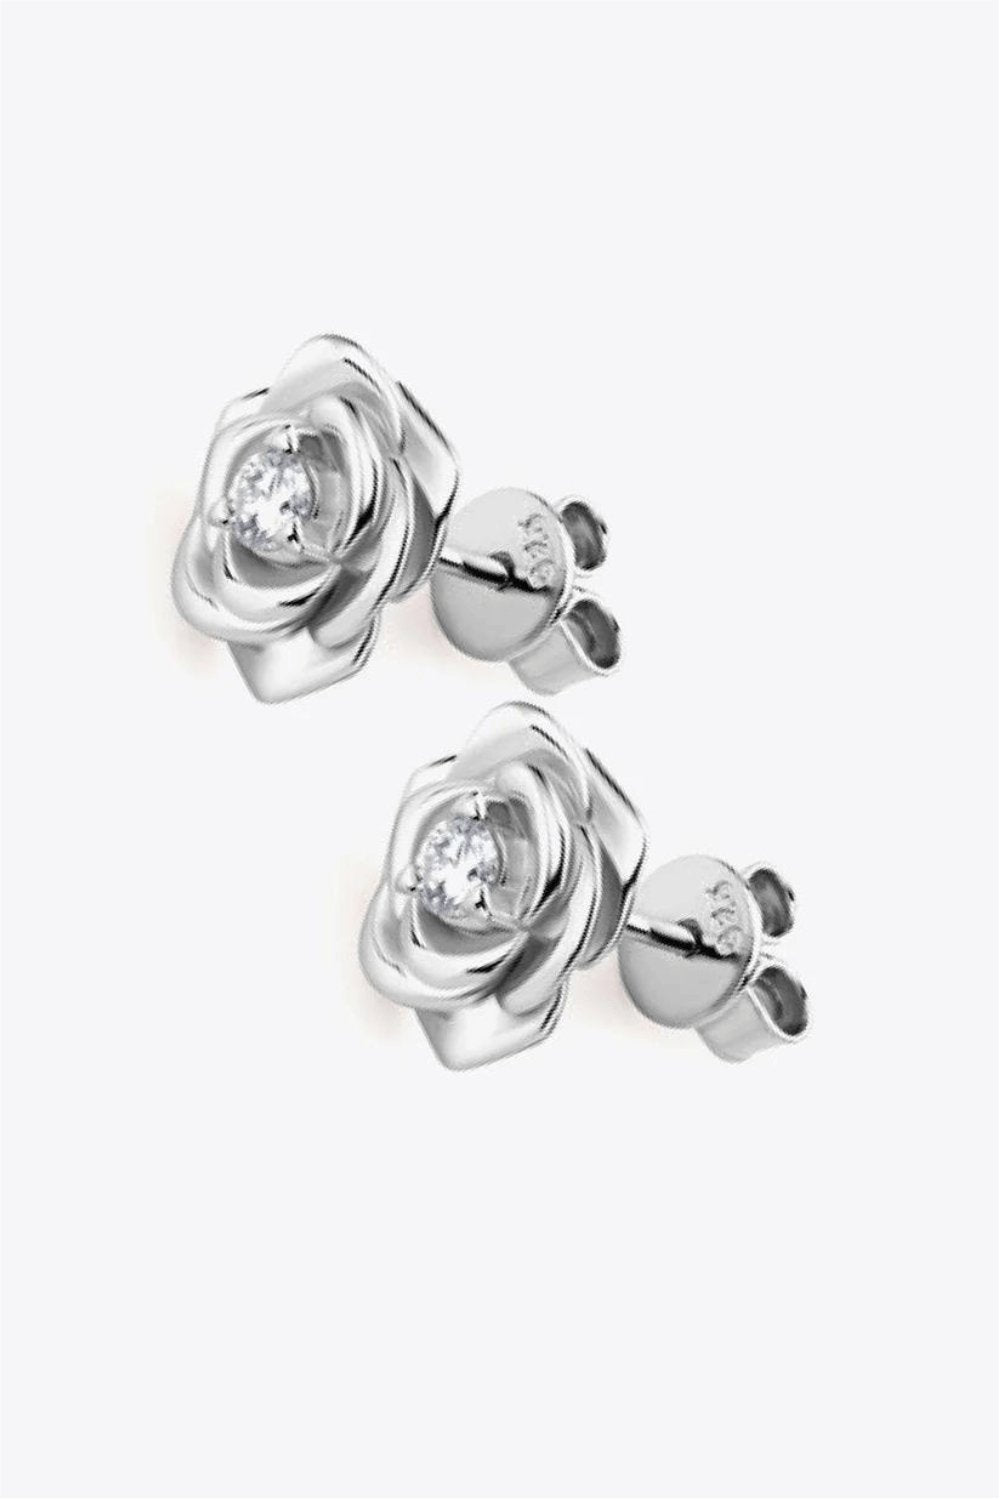 Generic Thaya S925 Sterling Silver Earrings Cherry Blossom Earrings For Women  Hypoallergenic Flower Earring Studs Fashion Fine Jewelry @ Best Price  Online